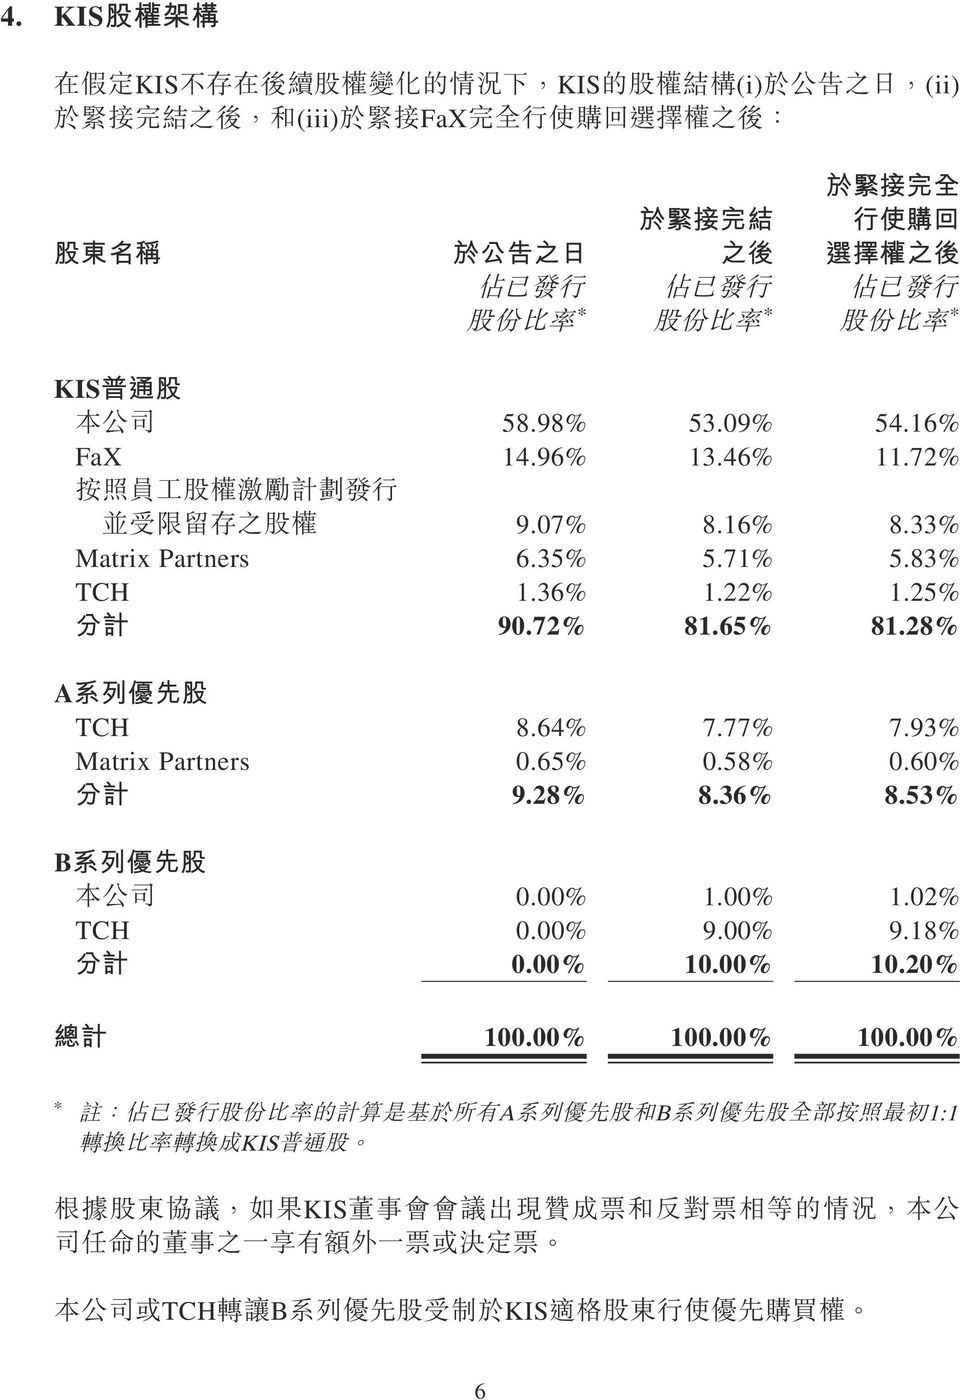 28% A TCH 8.64% 7.77% 7.93% Matrix Partners 0.65% 0.58% 0.60% 9.28% 8.36% 8.53% B 0.00% 1.